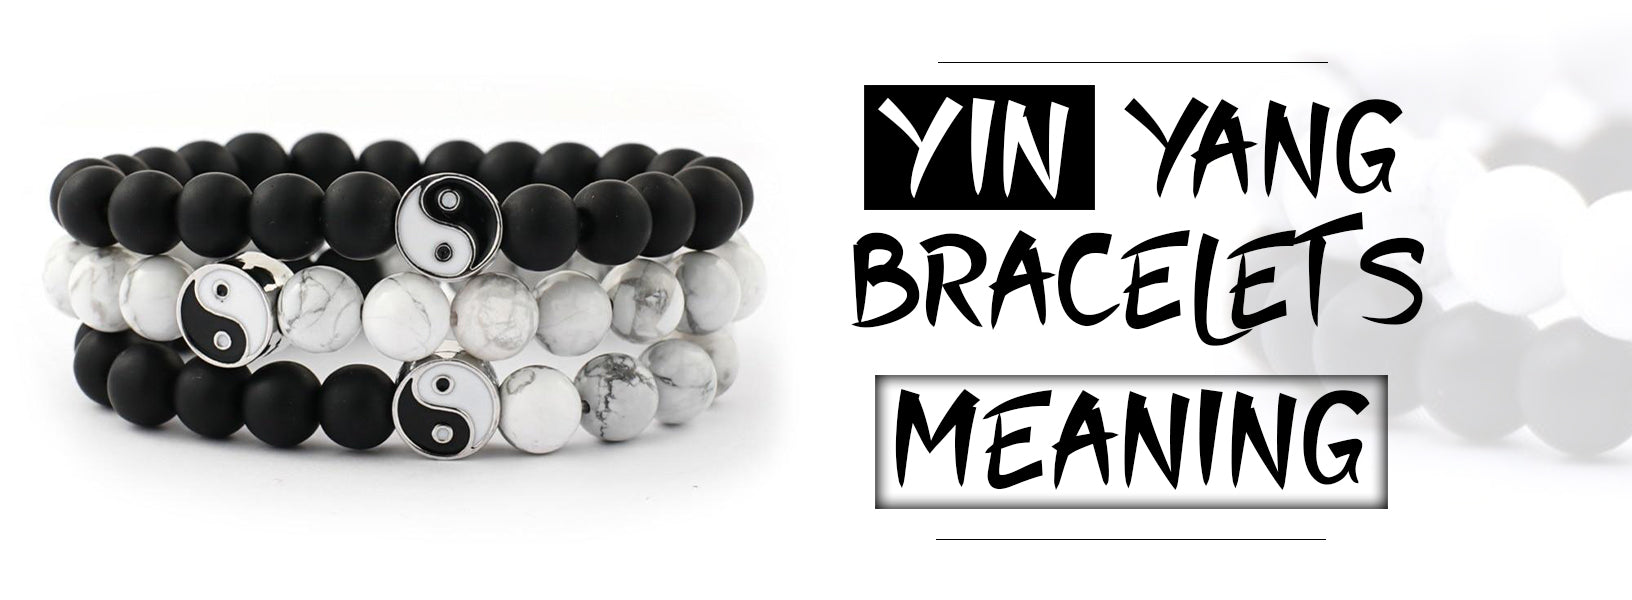 Yin Yang Bracelets Meaning